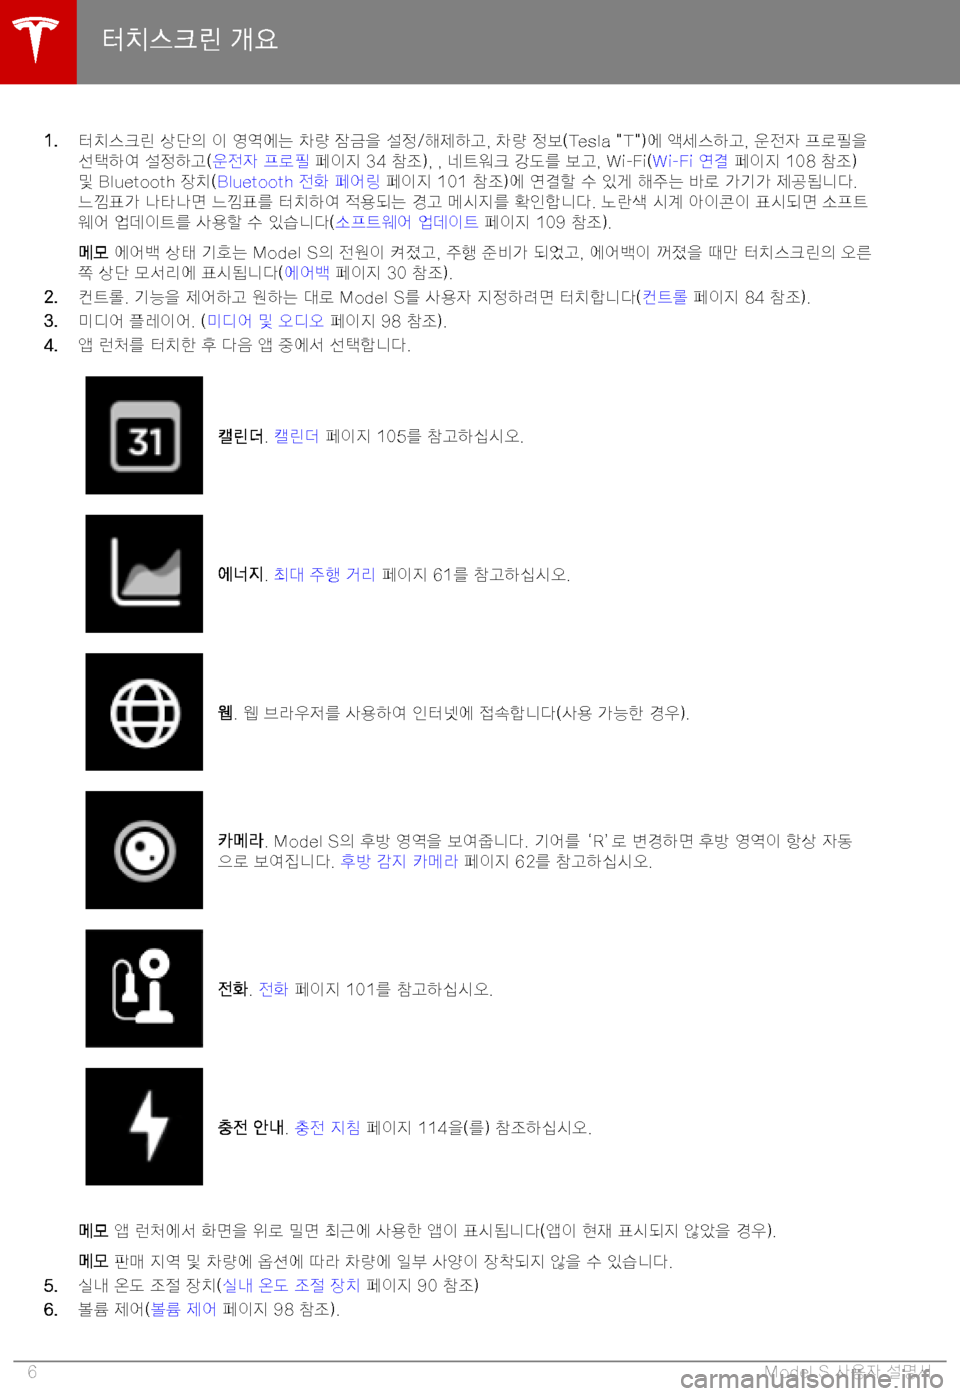 TESLA MODEL S 2019  사용자 가이드 (in Korean) �1�.GMDu8